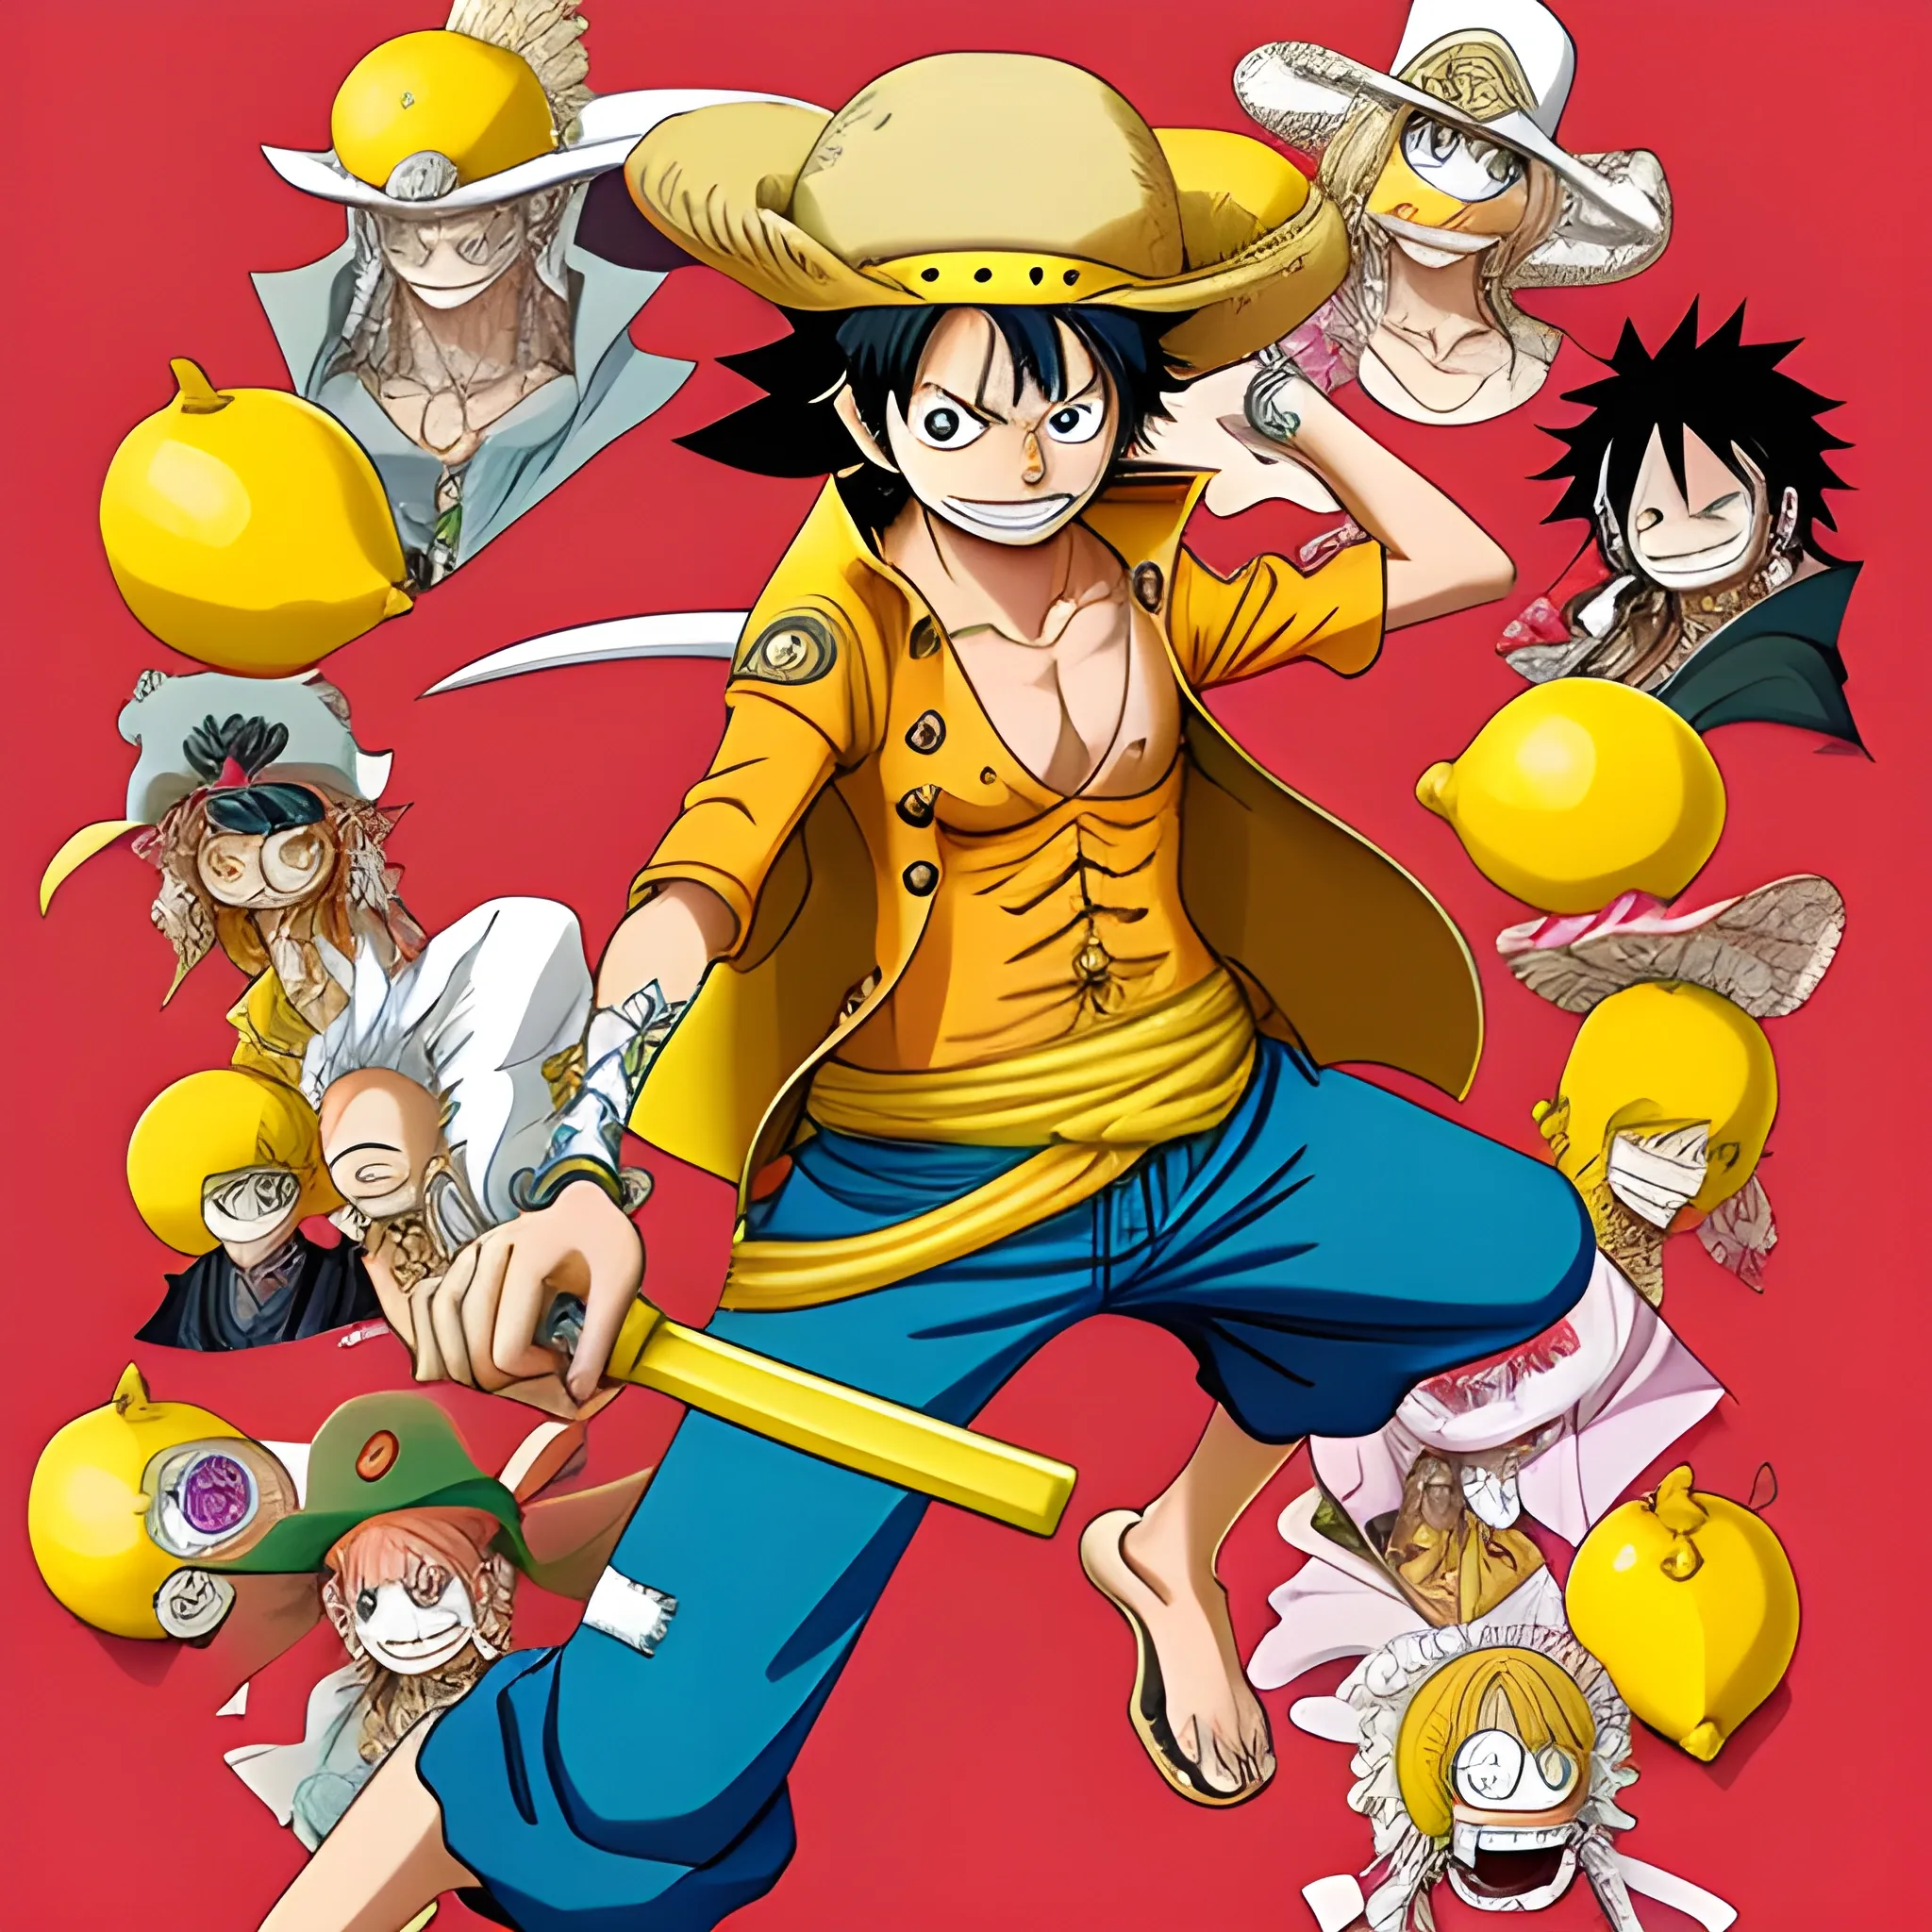 Pocket of lemons, One Piece, Anime, Robin.